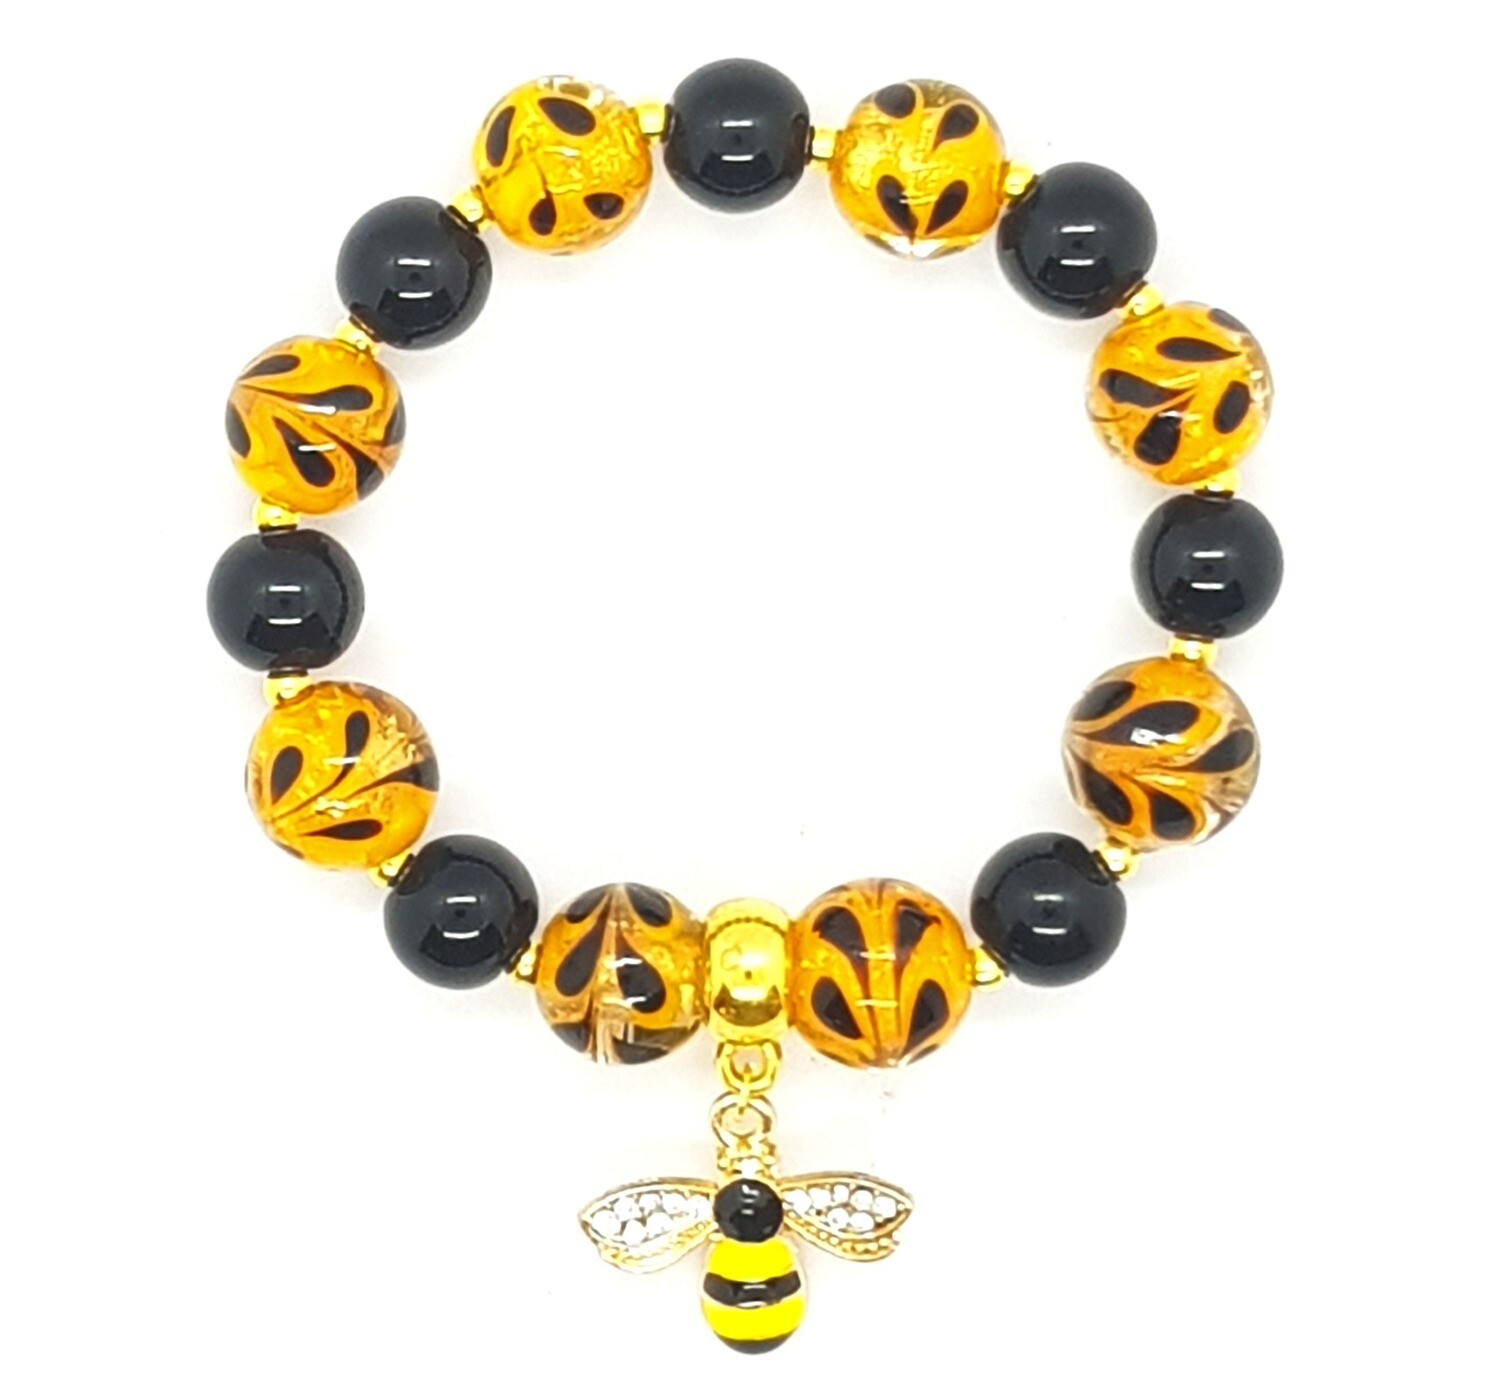 Bracelet Flexible (Bianca - Italy Murano Glass Lampwork Beads 14mm, Black Pearl Beads 10mm & Bee's Pendant)